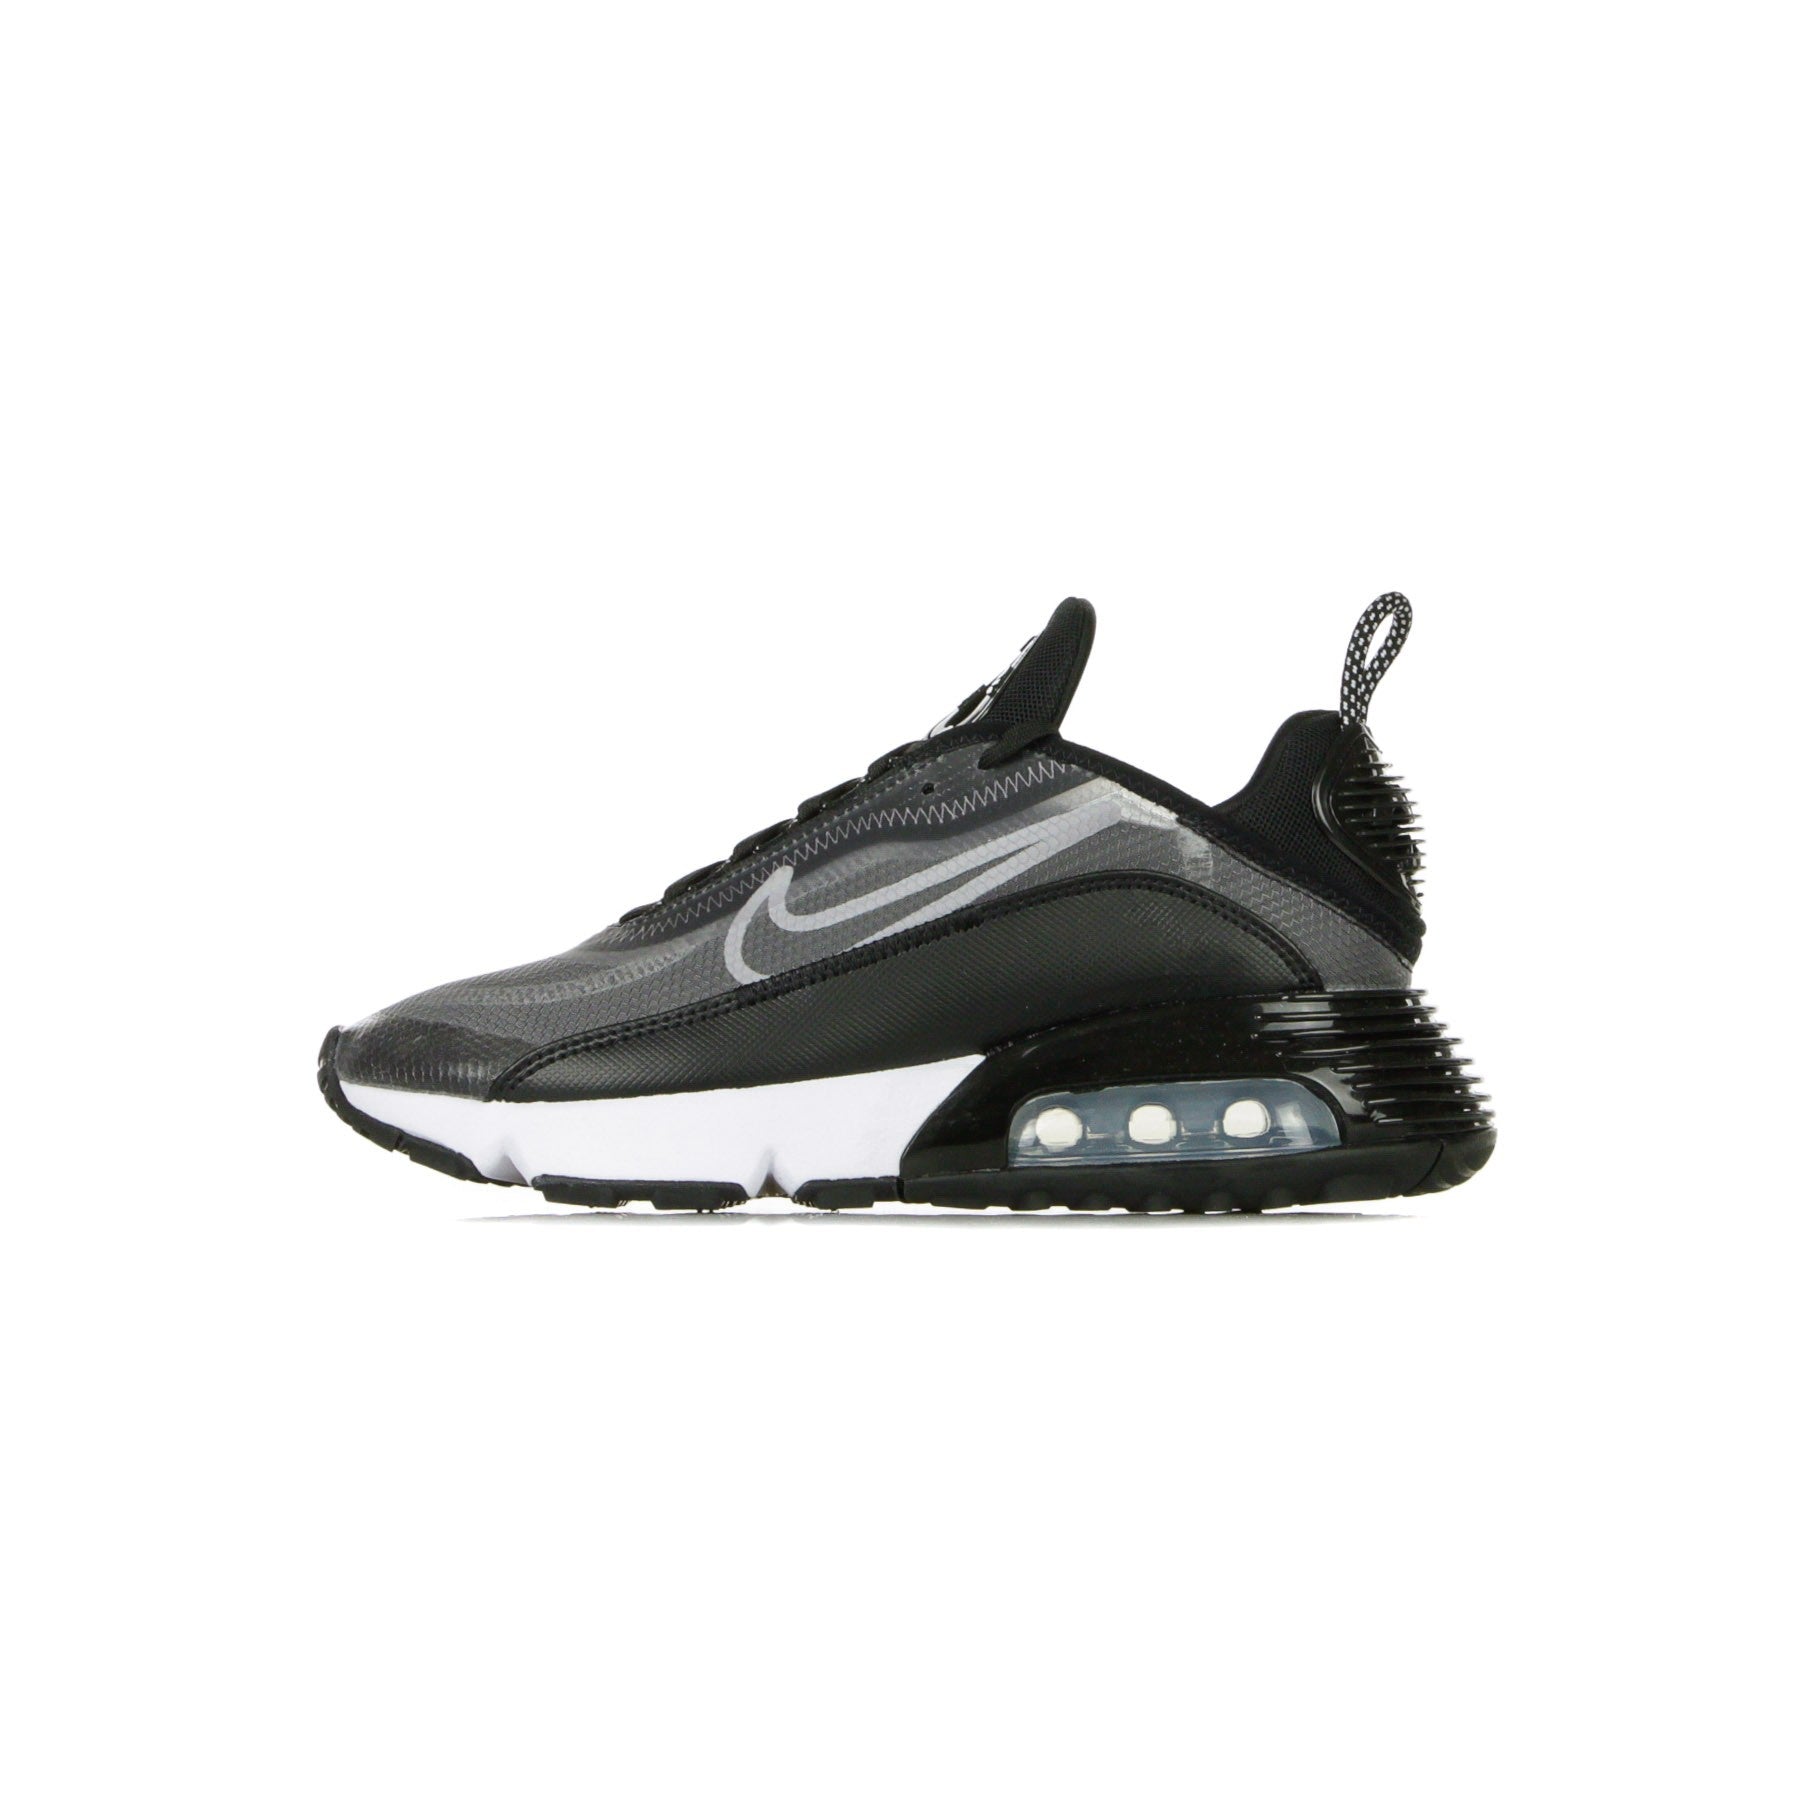 Nike, Scarpa Bassa Donna W Air Max 2090, Black/white/metallic Silver